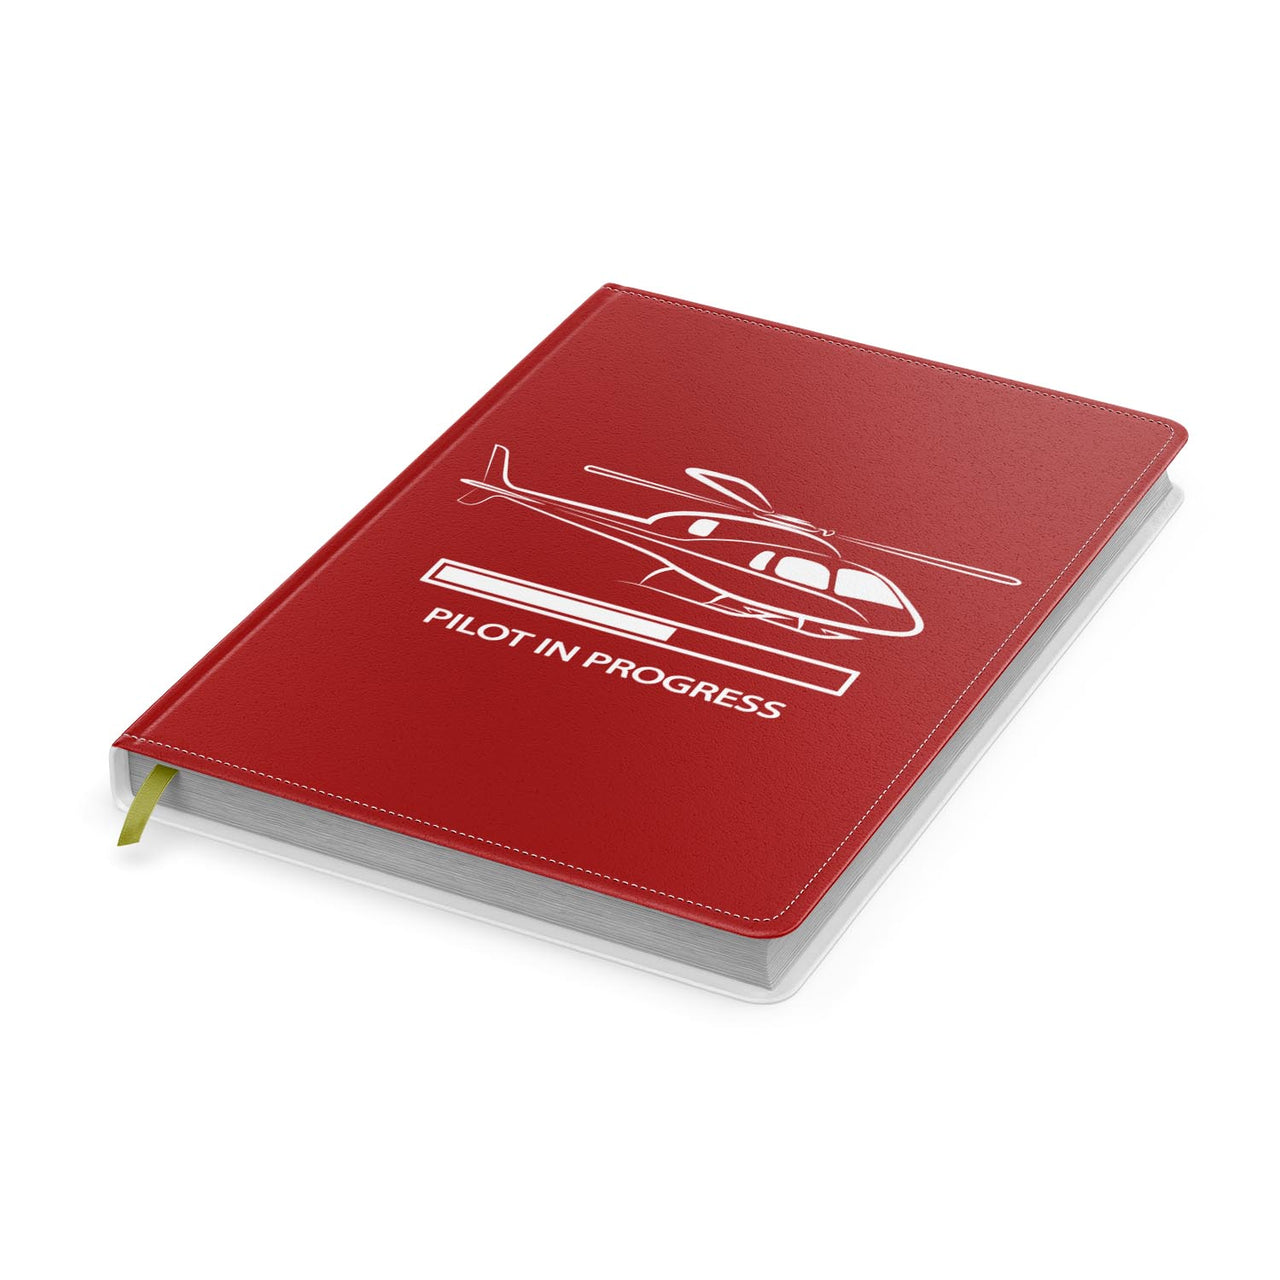 Pilot In Progress (Helicopter) Designed Notebooks